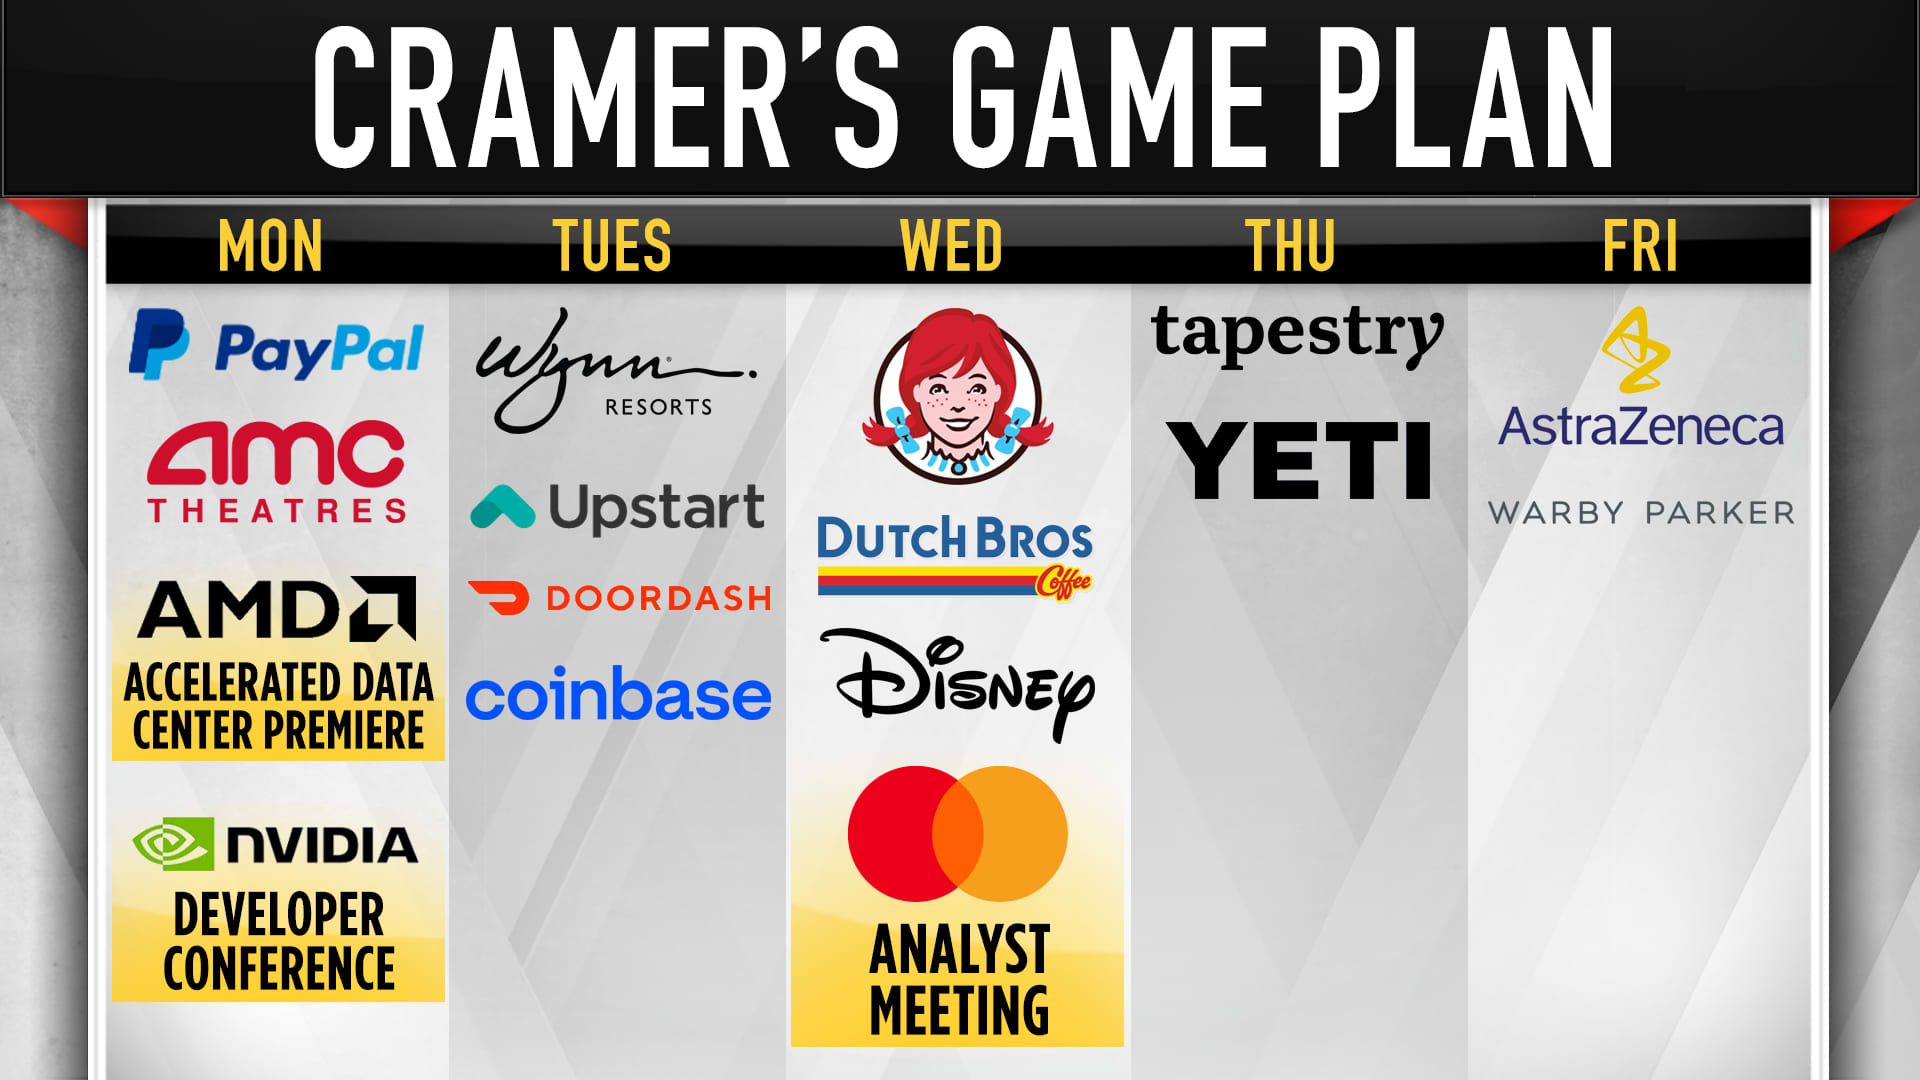 Jim Cramer's game plan for the trading week of Nov. 8.